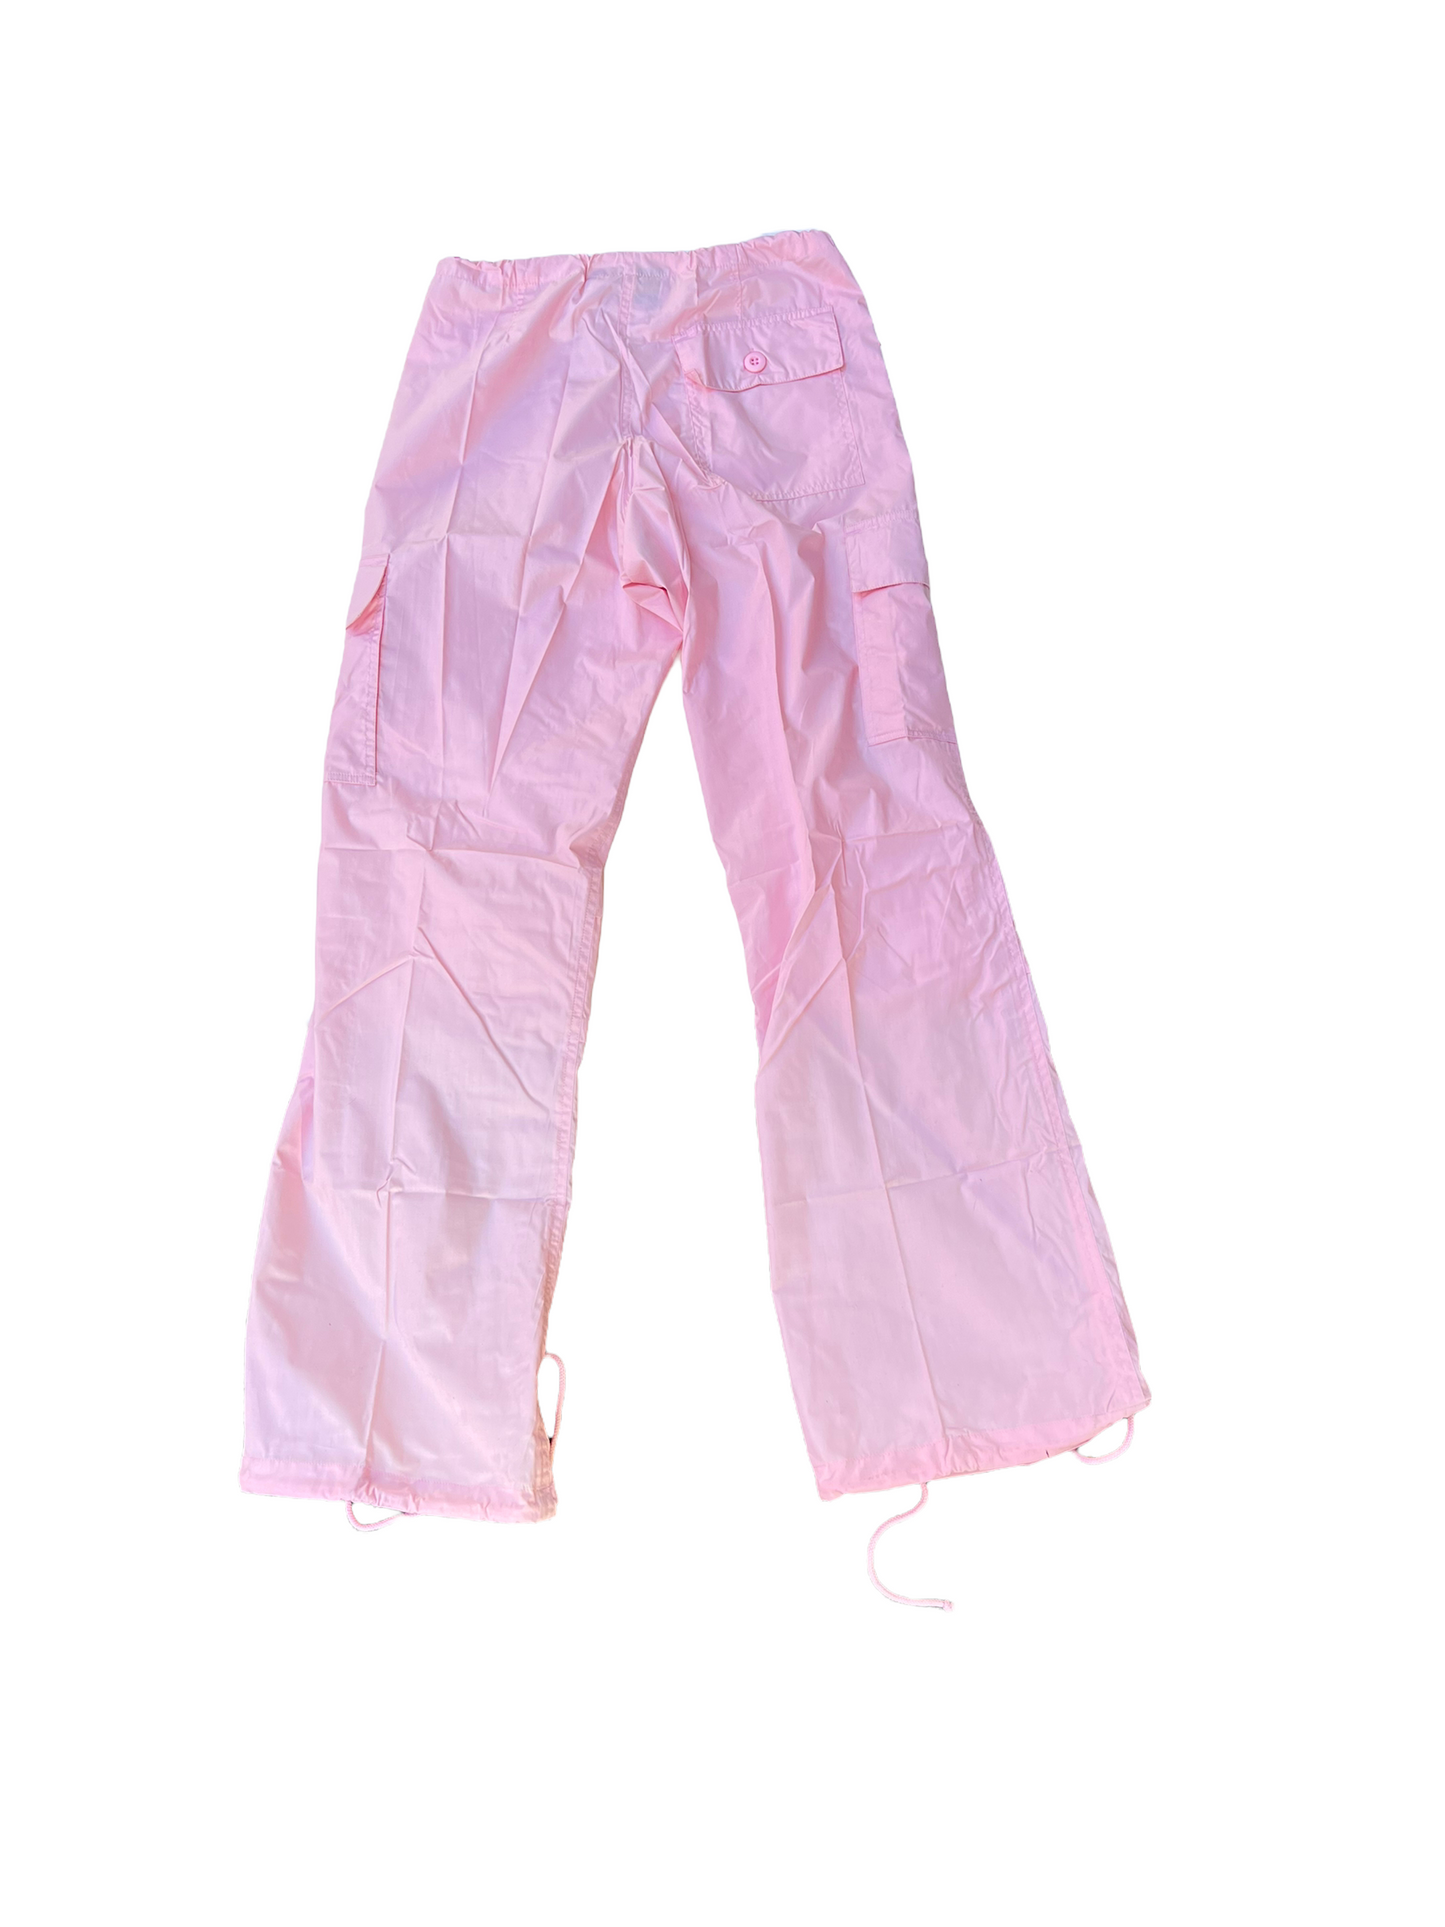 UFO Parachute Cargo Pants/Hot Pink 83840 – Thirteen Crosby